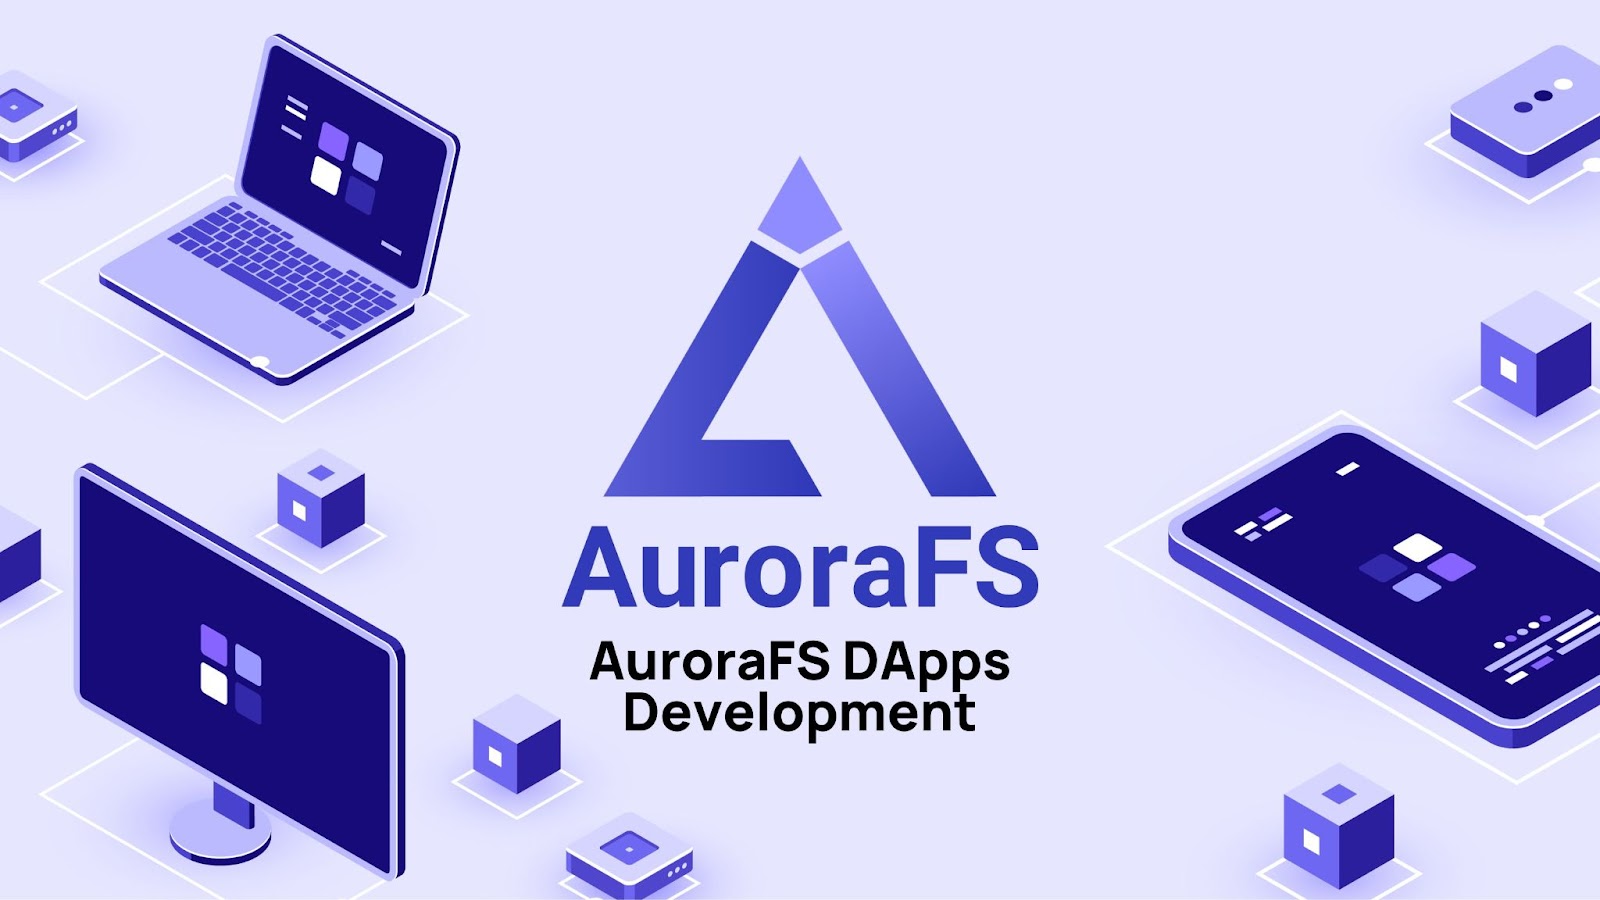 AuroraFS DApps Development Capabilities to Be Enhanced